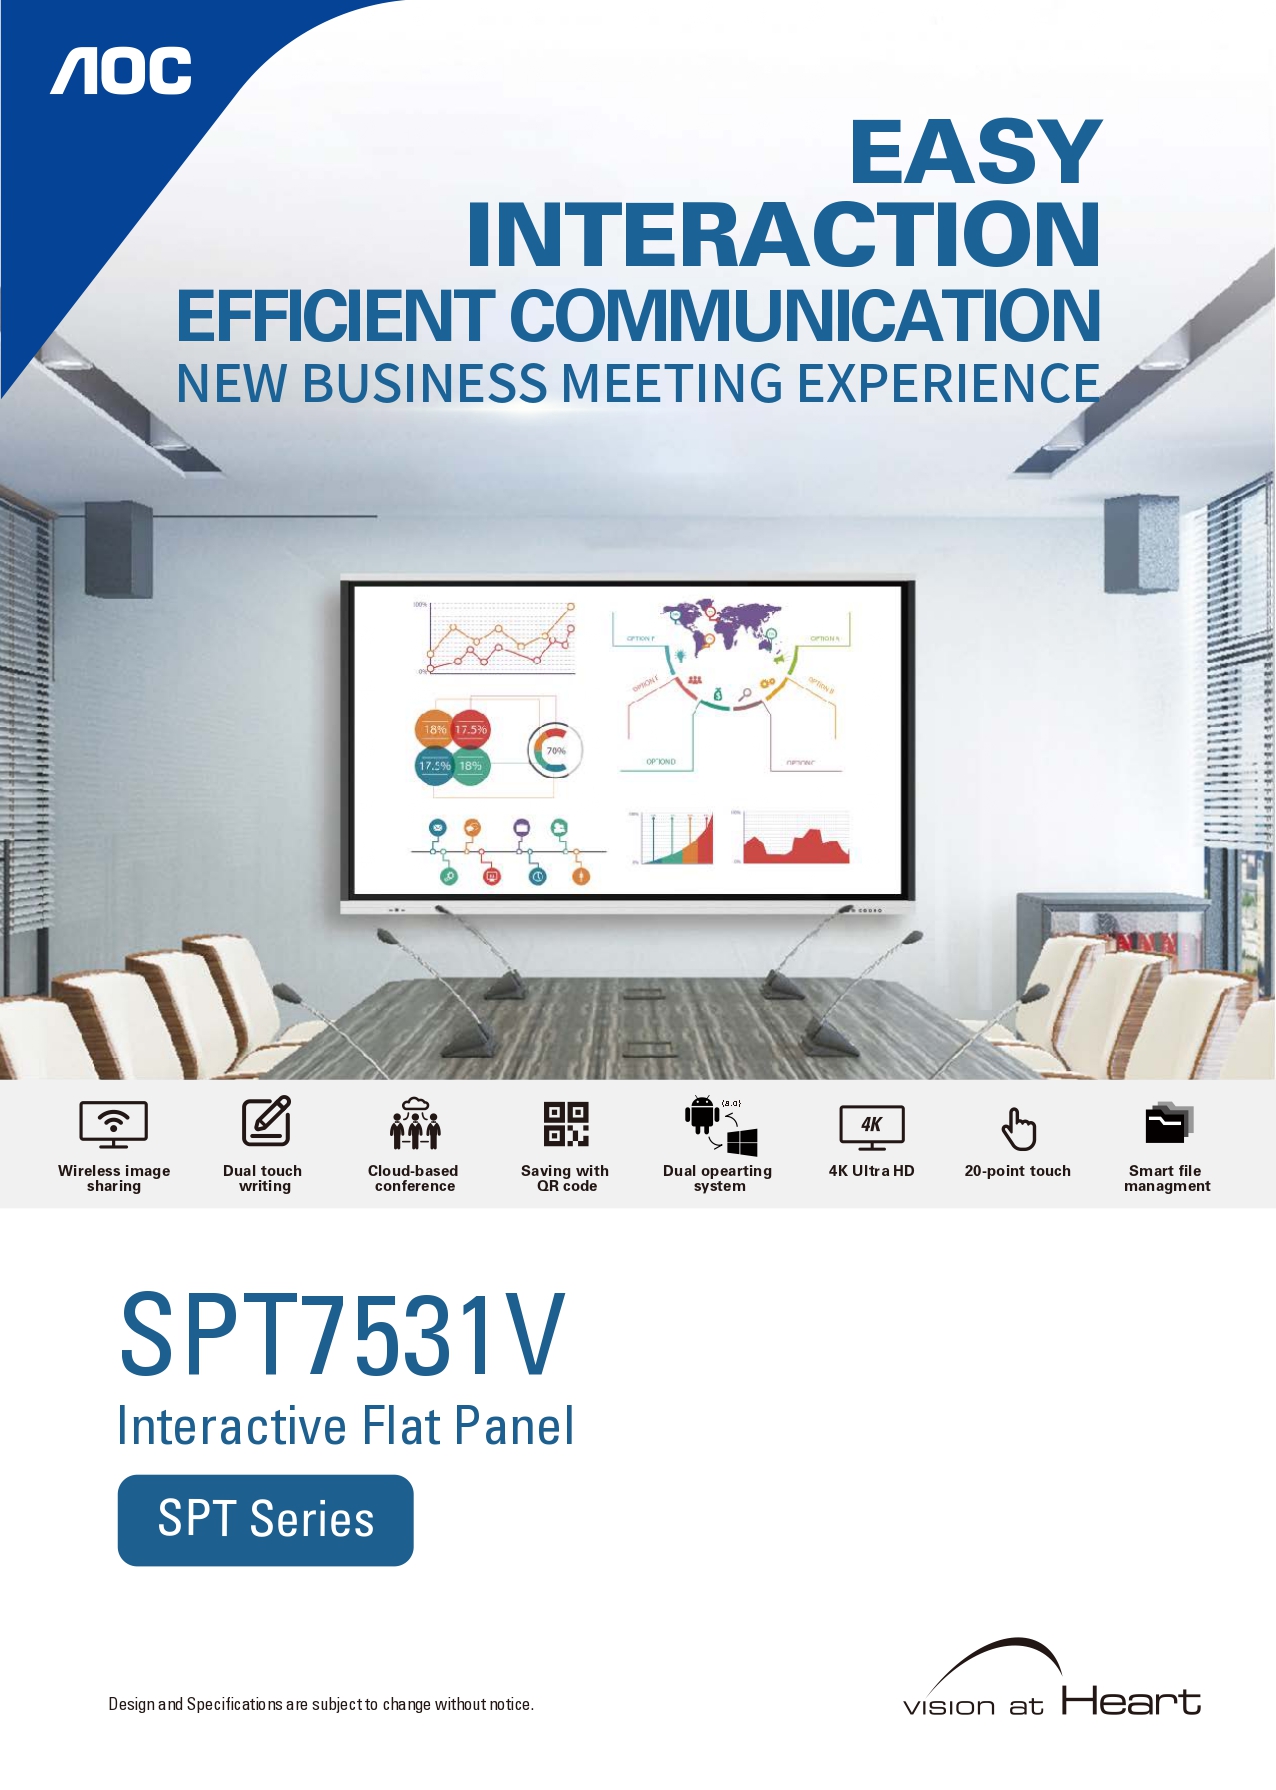 AOC SPT7531V Interactive Flat Panel SPT Series